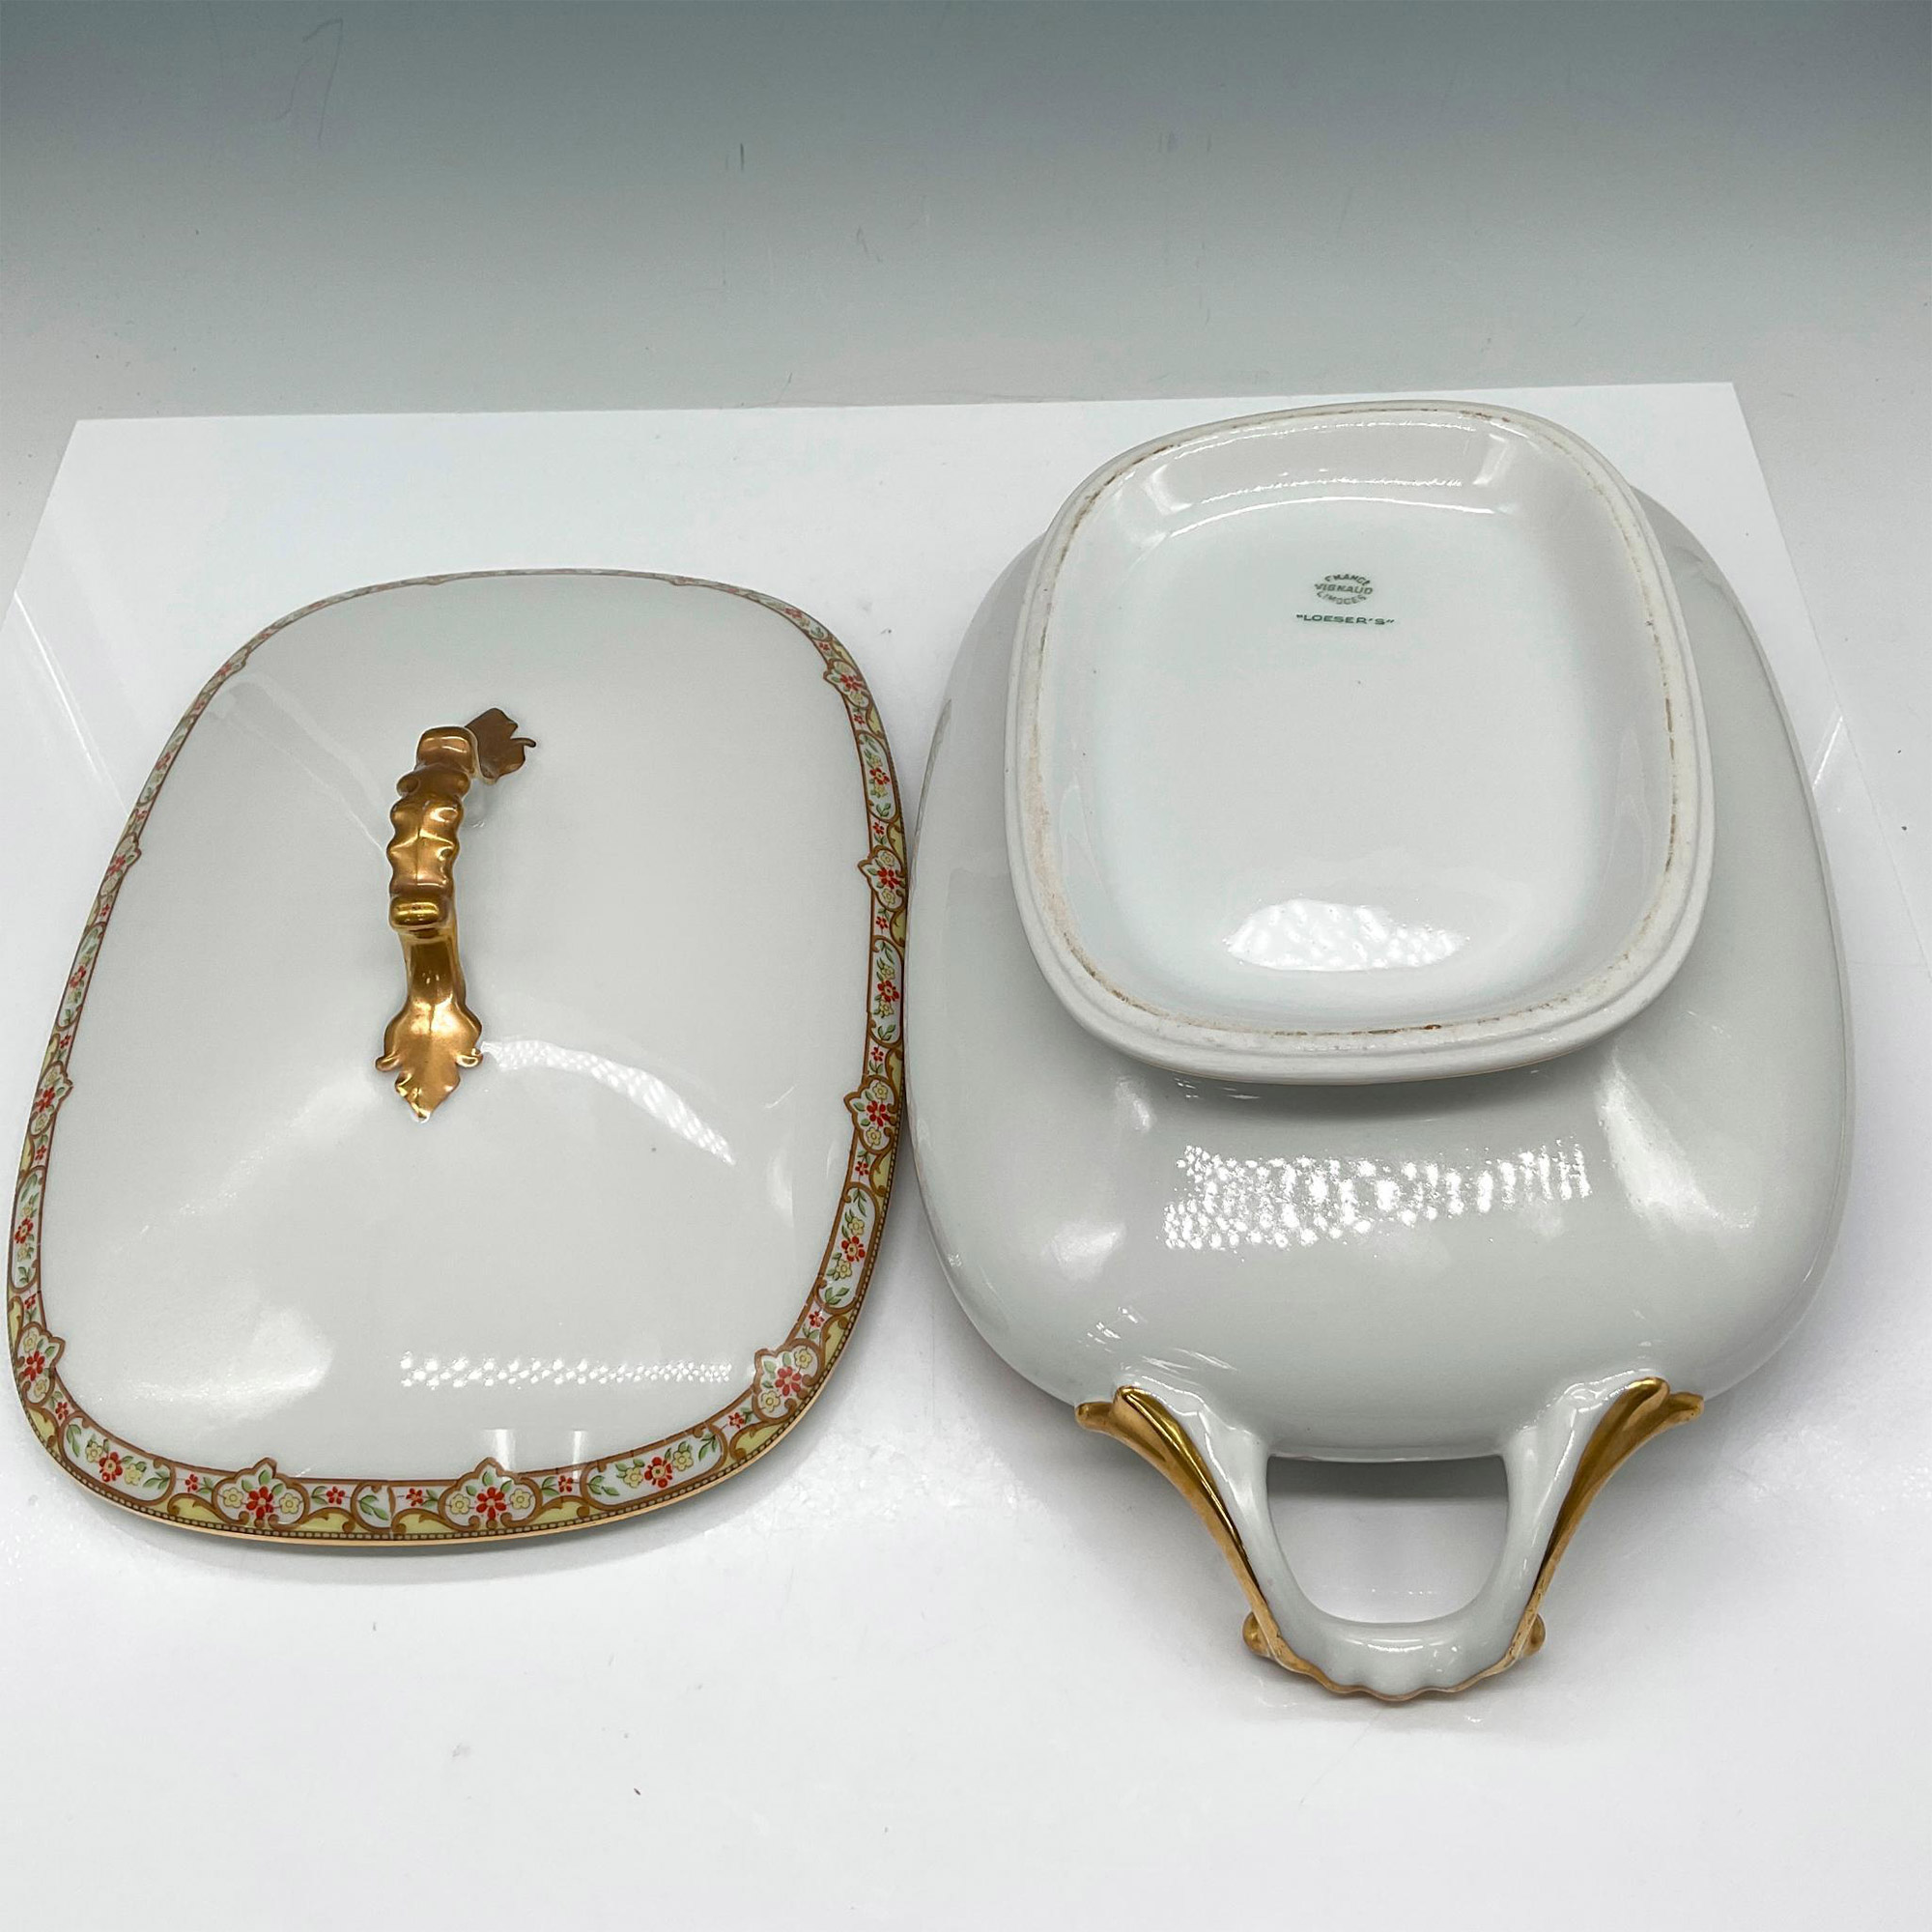 Limoges Vignaud Porcelain Serveware, Oval Covered Dish - Image 3 of 3